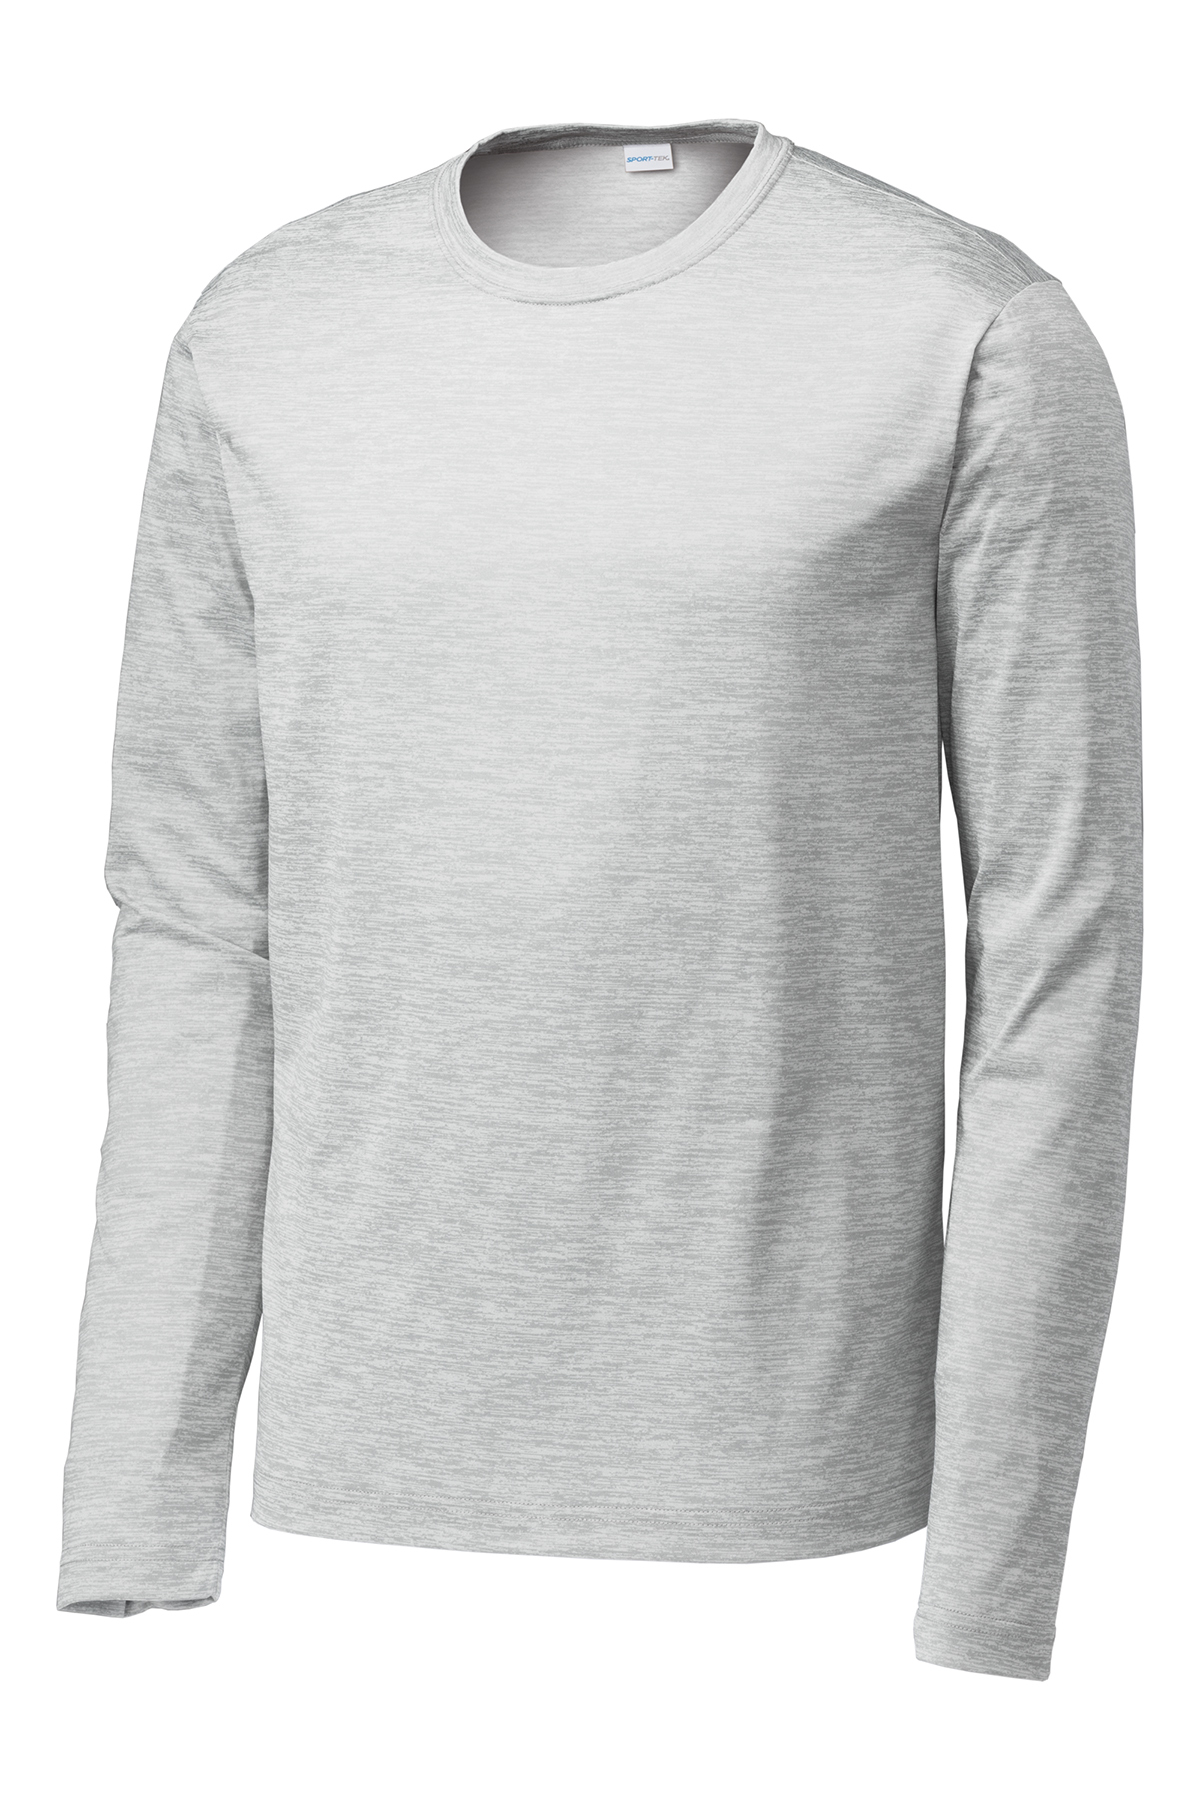 Louisville RiverFrogs T-Shirt (premium Lightweight) 2XL / Heather Grey